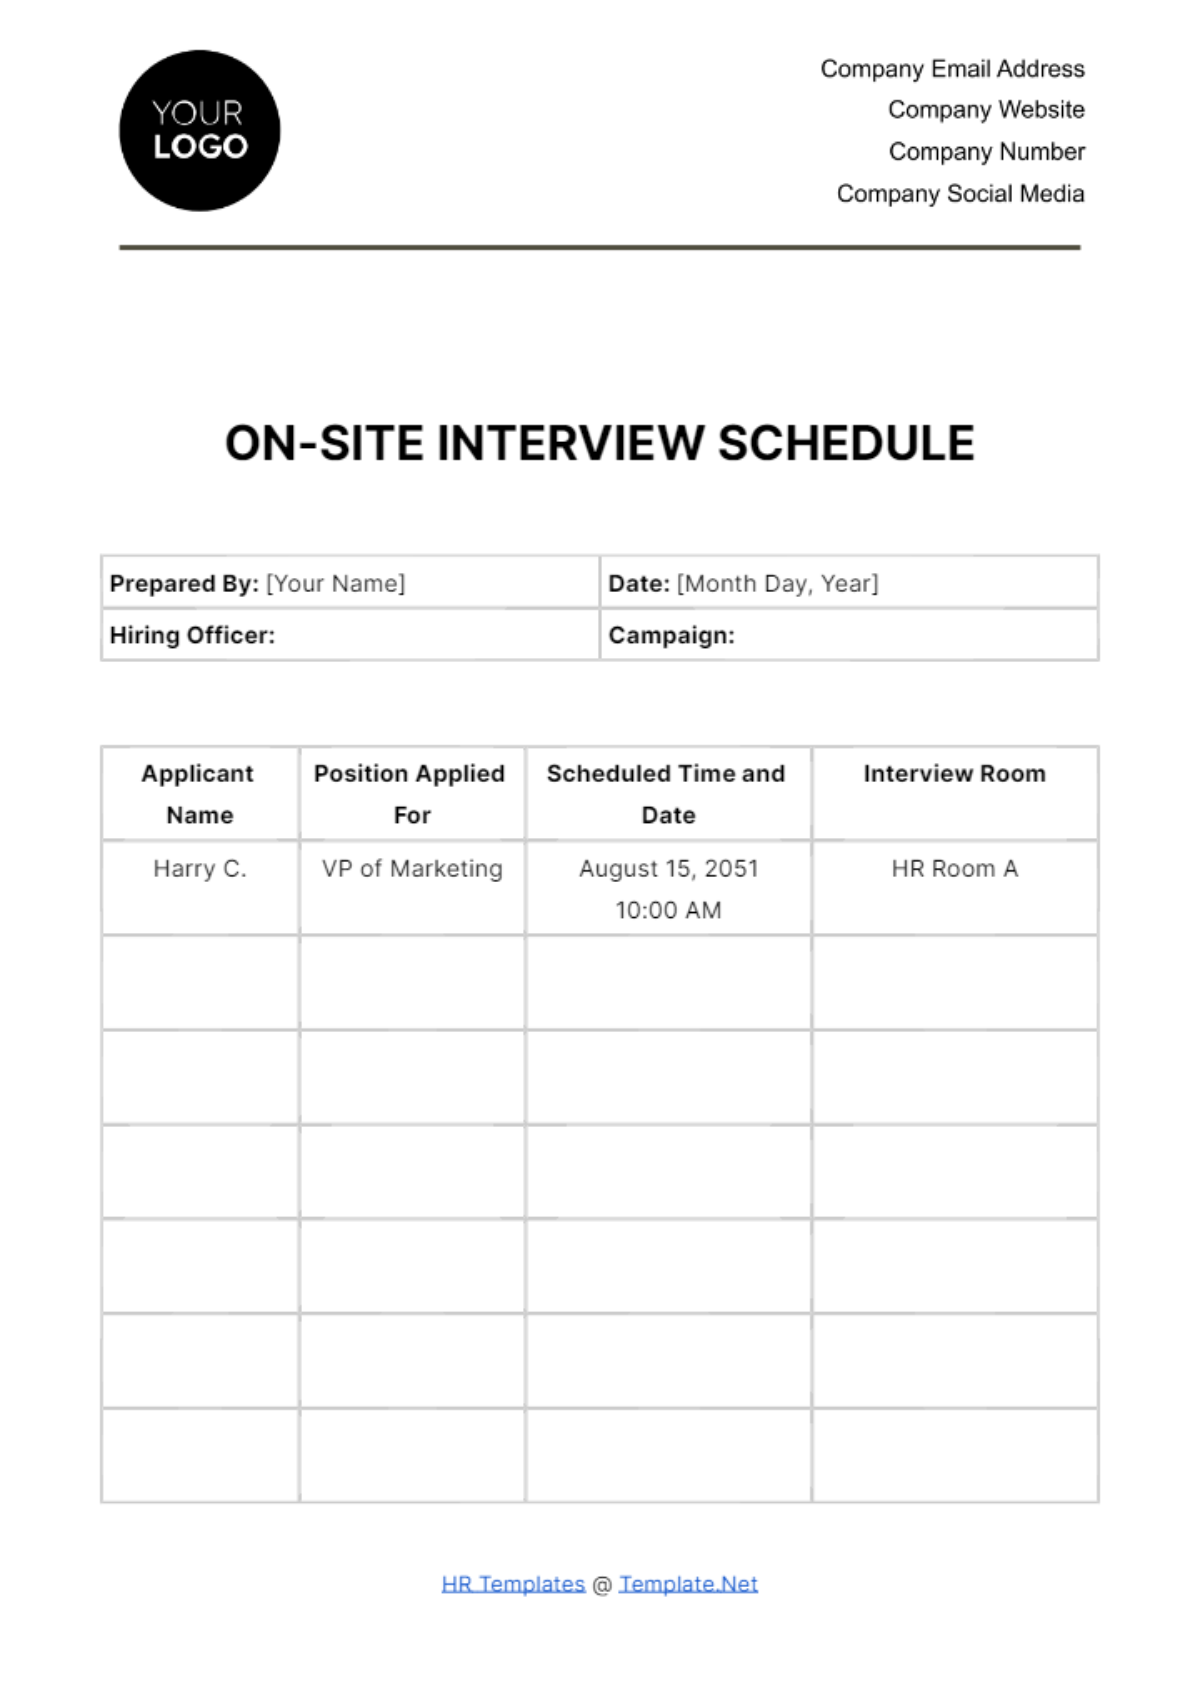 On-site Interview Schedule HR Template